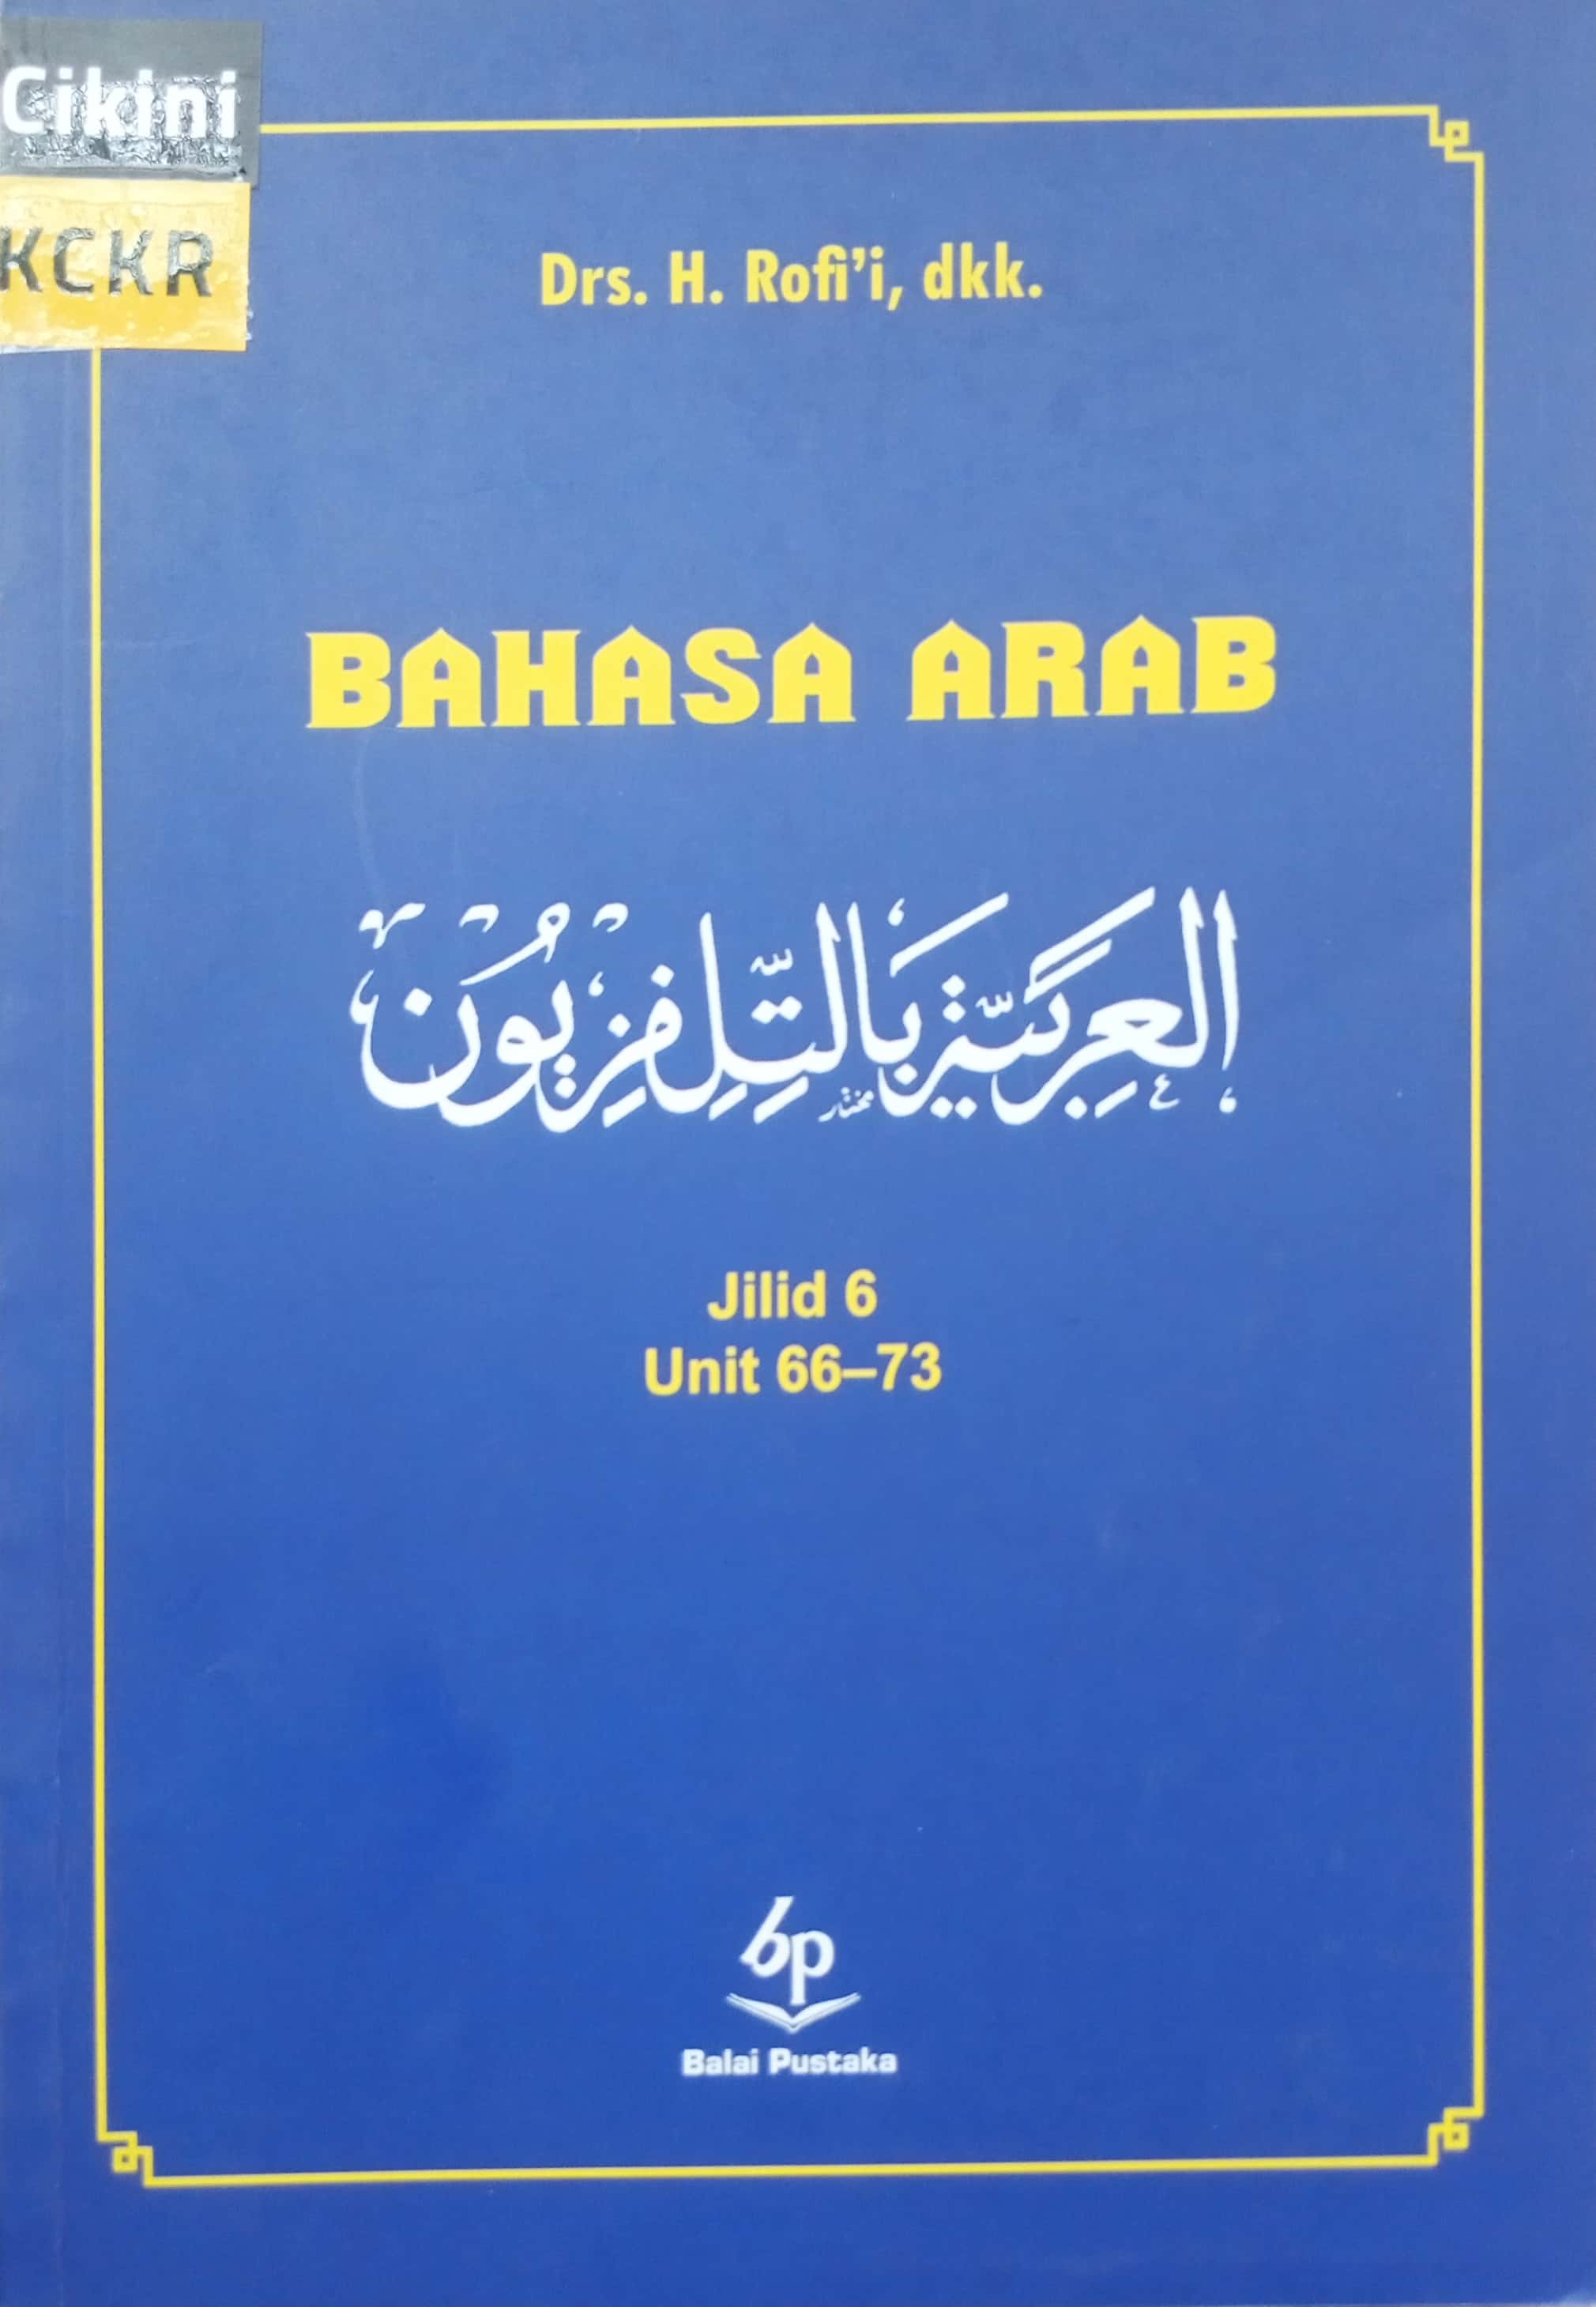 Bahasa Arab jilid 6 unit 66-73